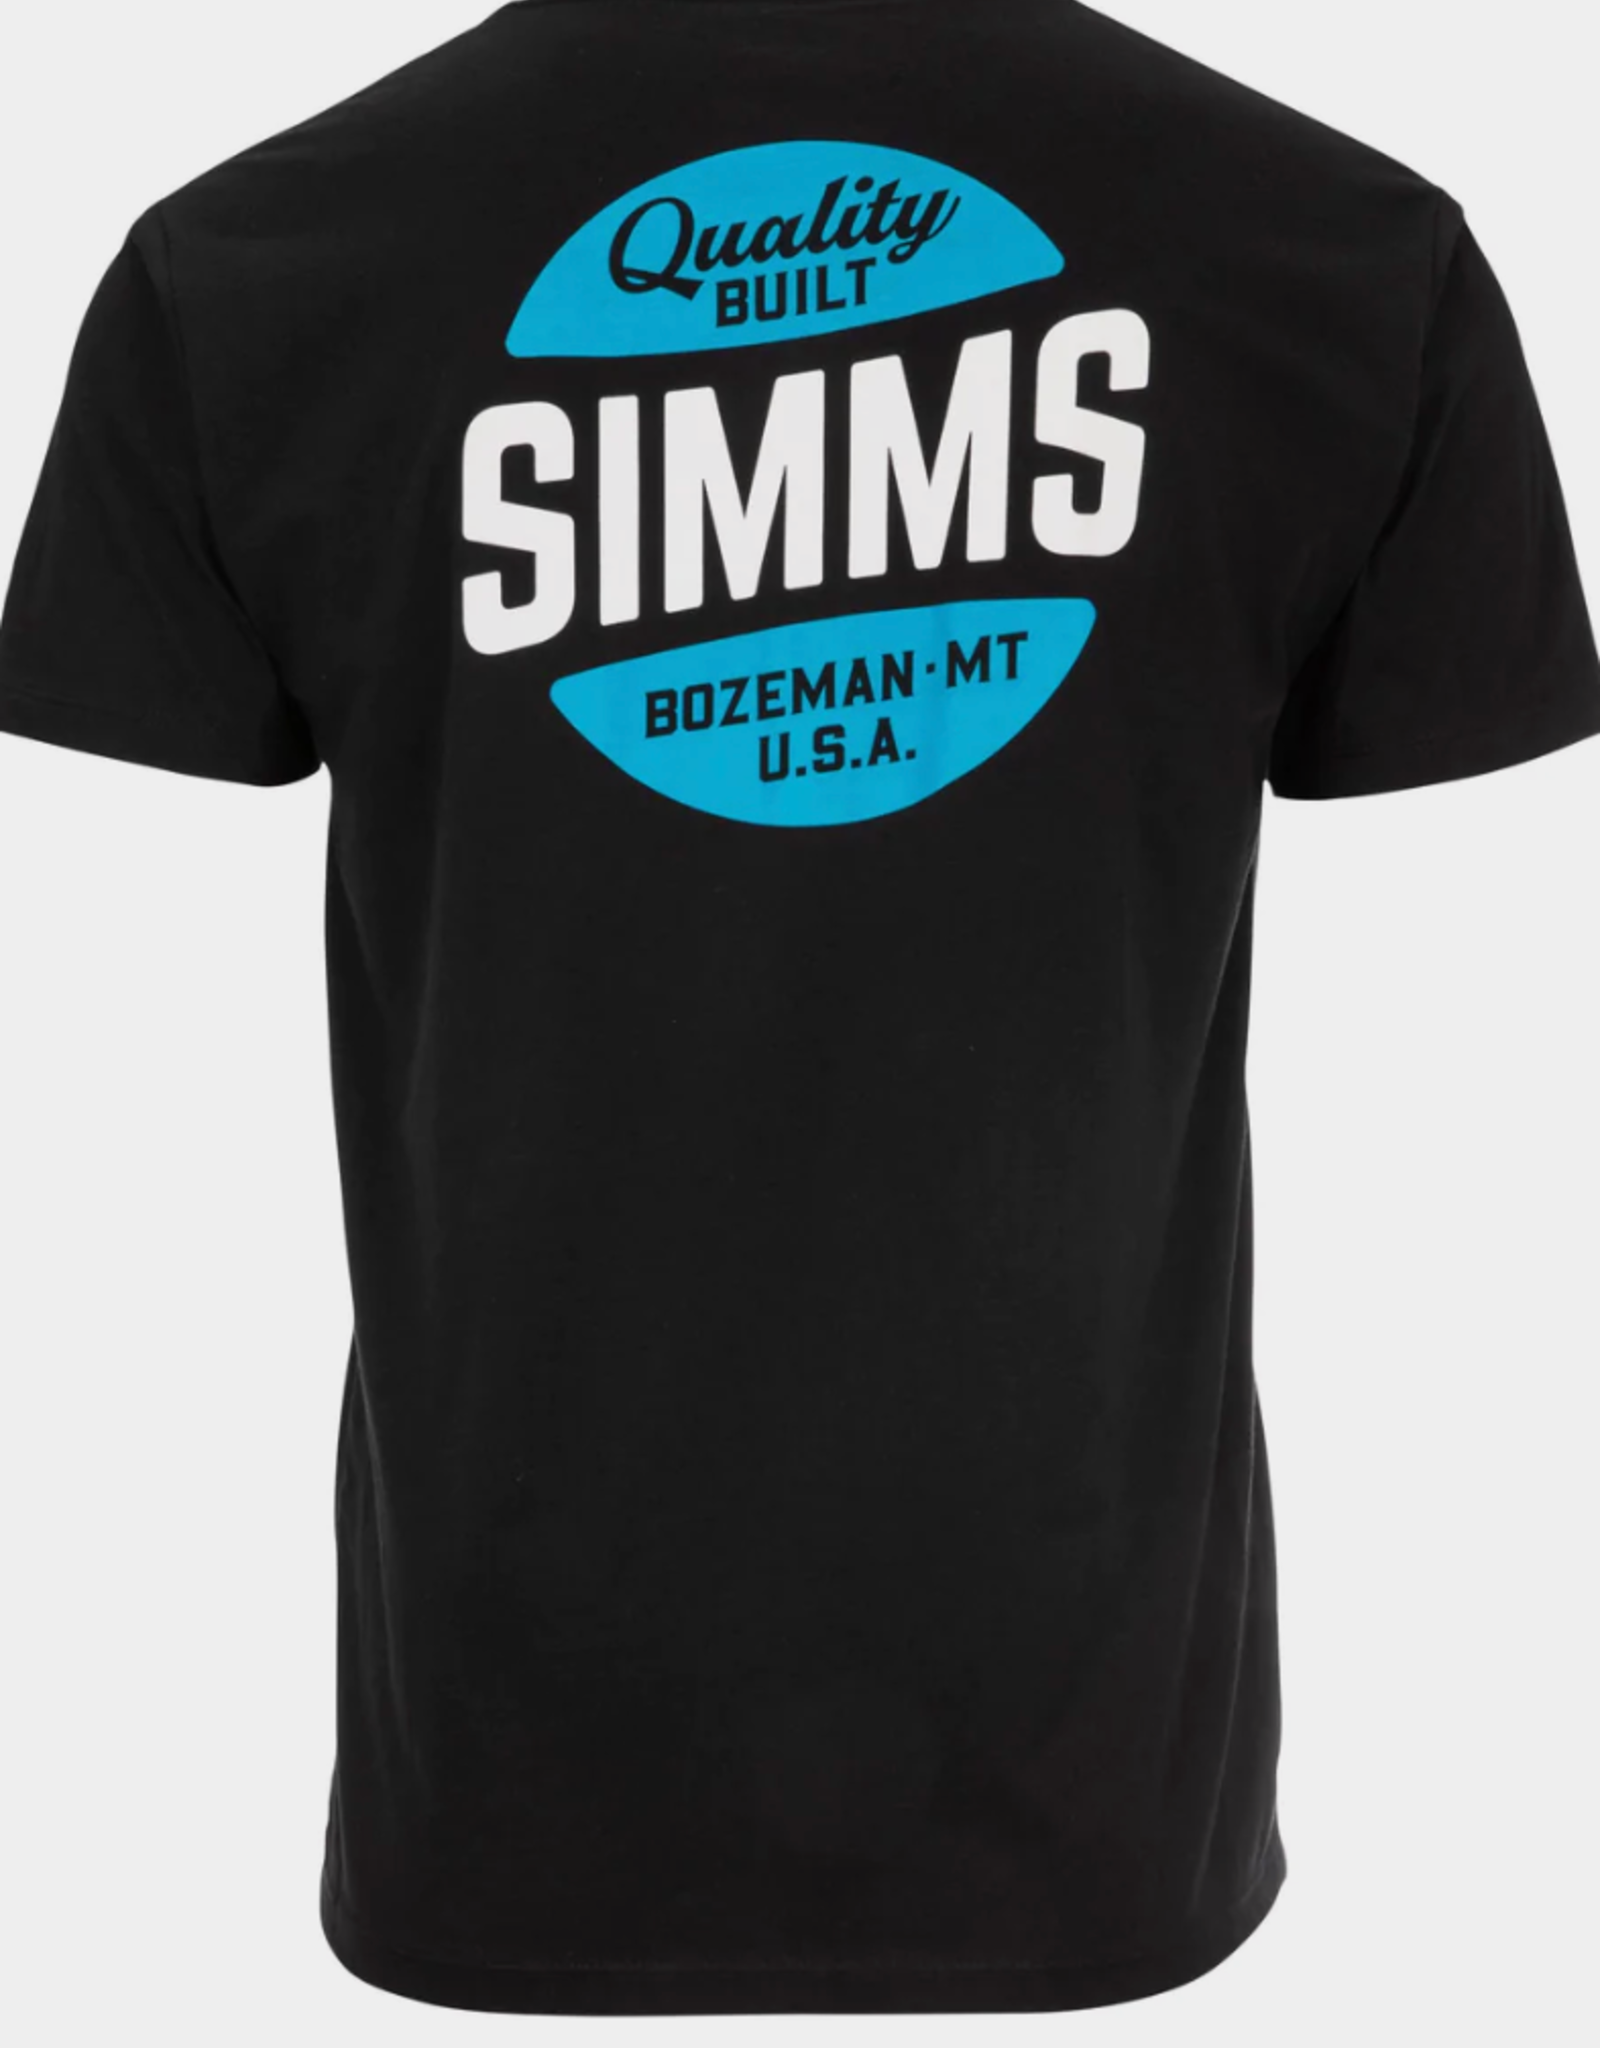 Simms T-Shirt Homme Simms Quality Built avec Poche